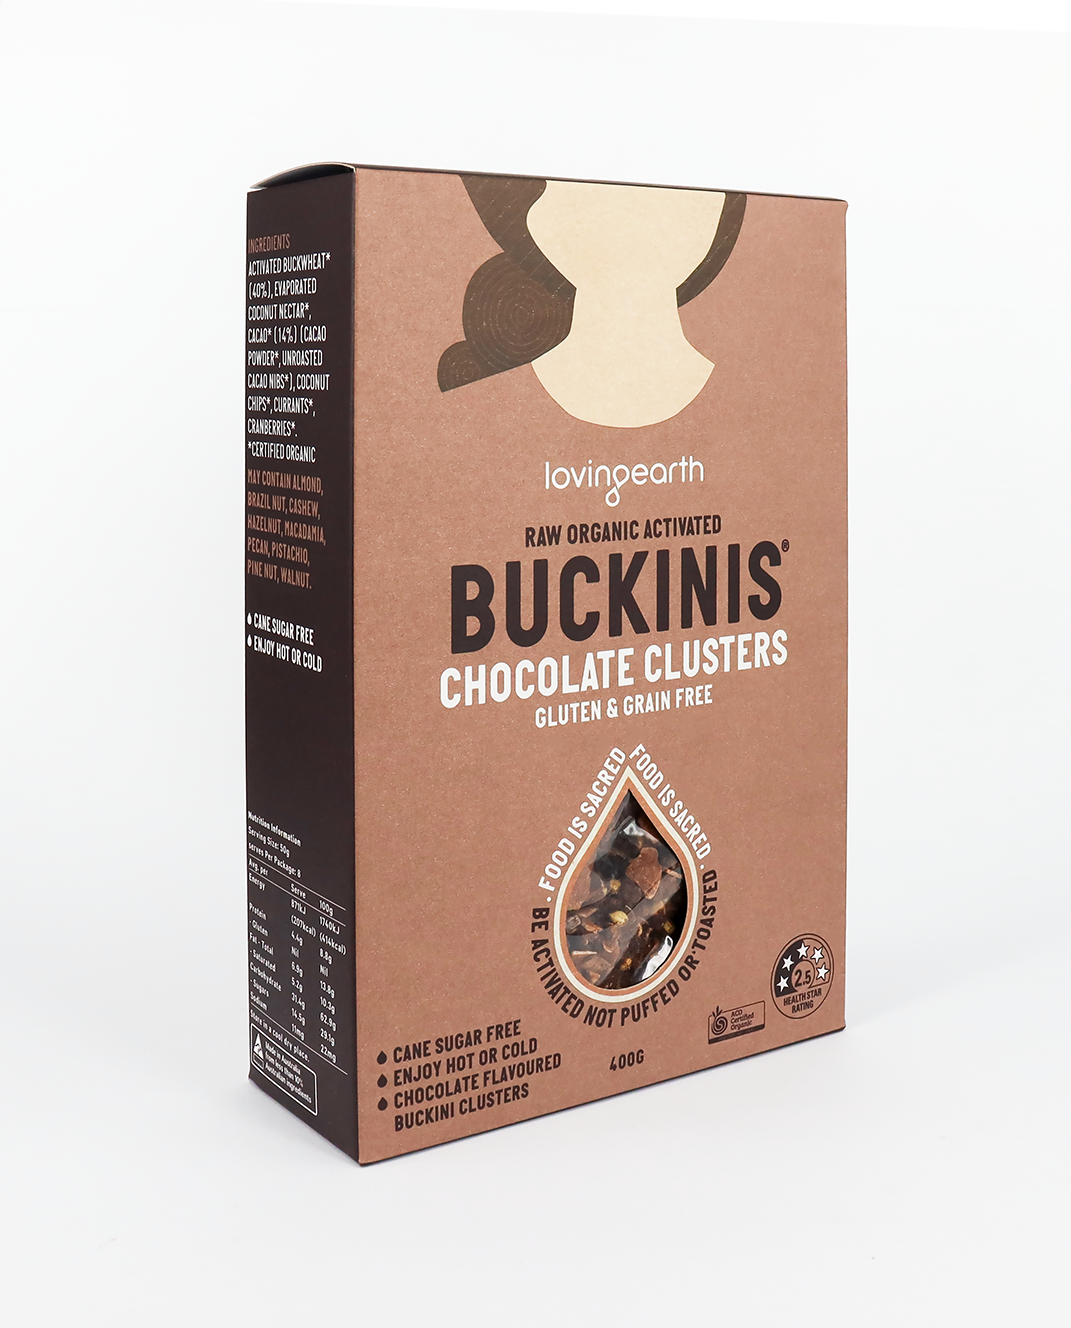 Loving Earth - Buckinis Chocolate Clusters